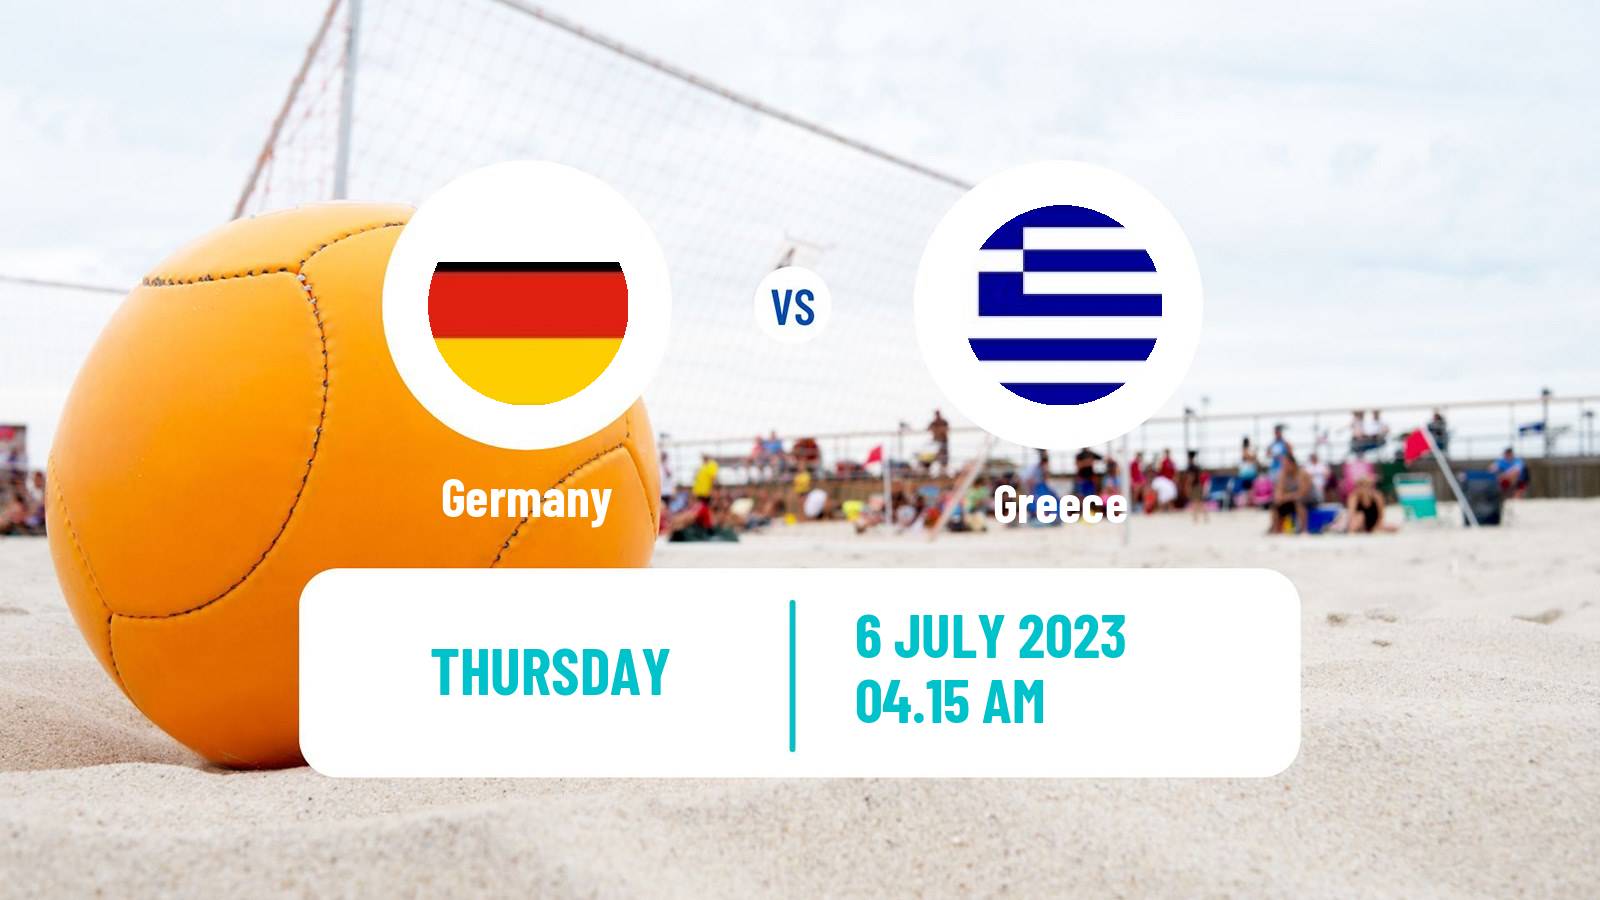 Beach soccer World Cup Germany - Greece